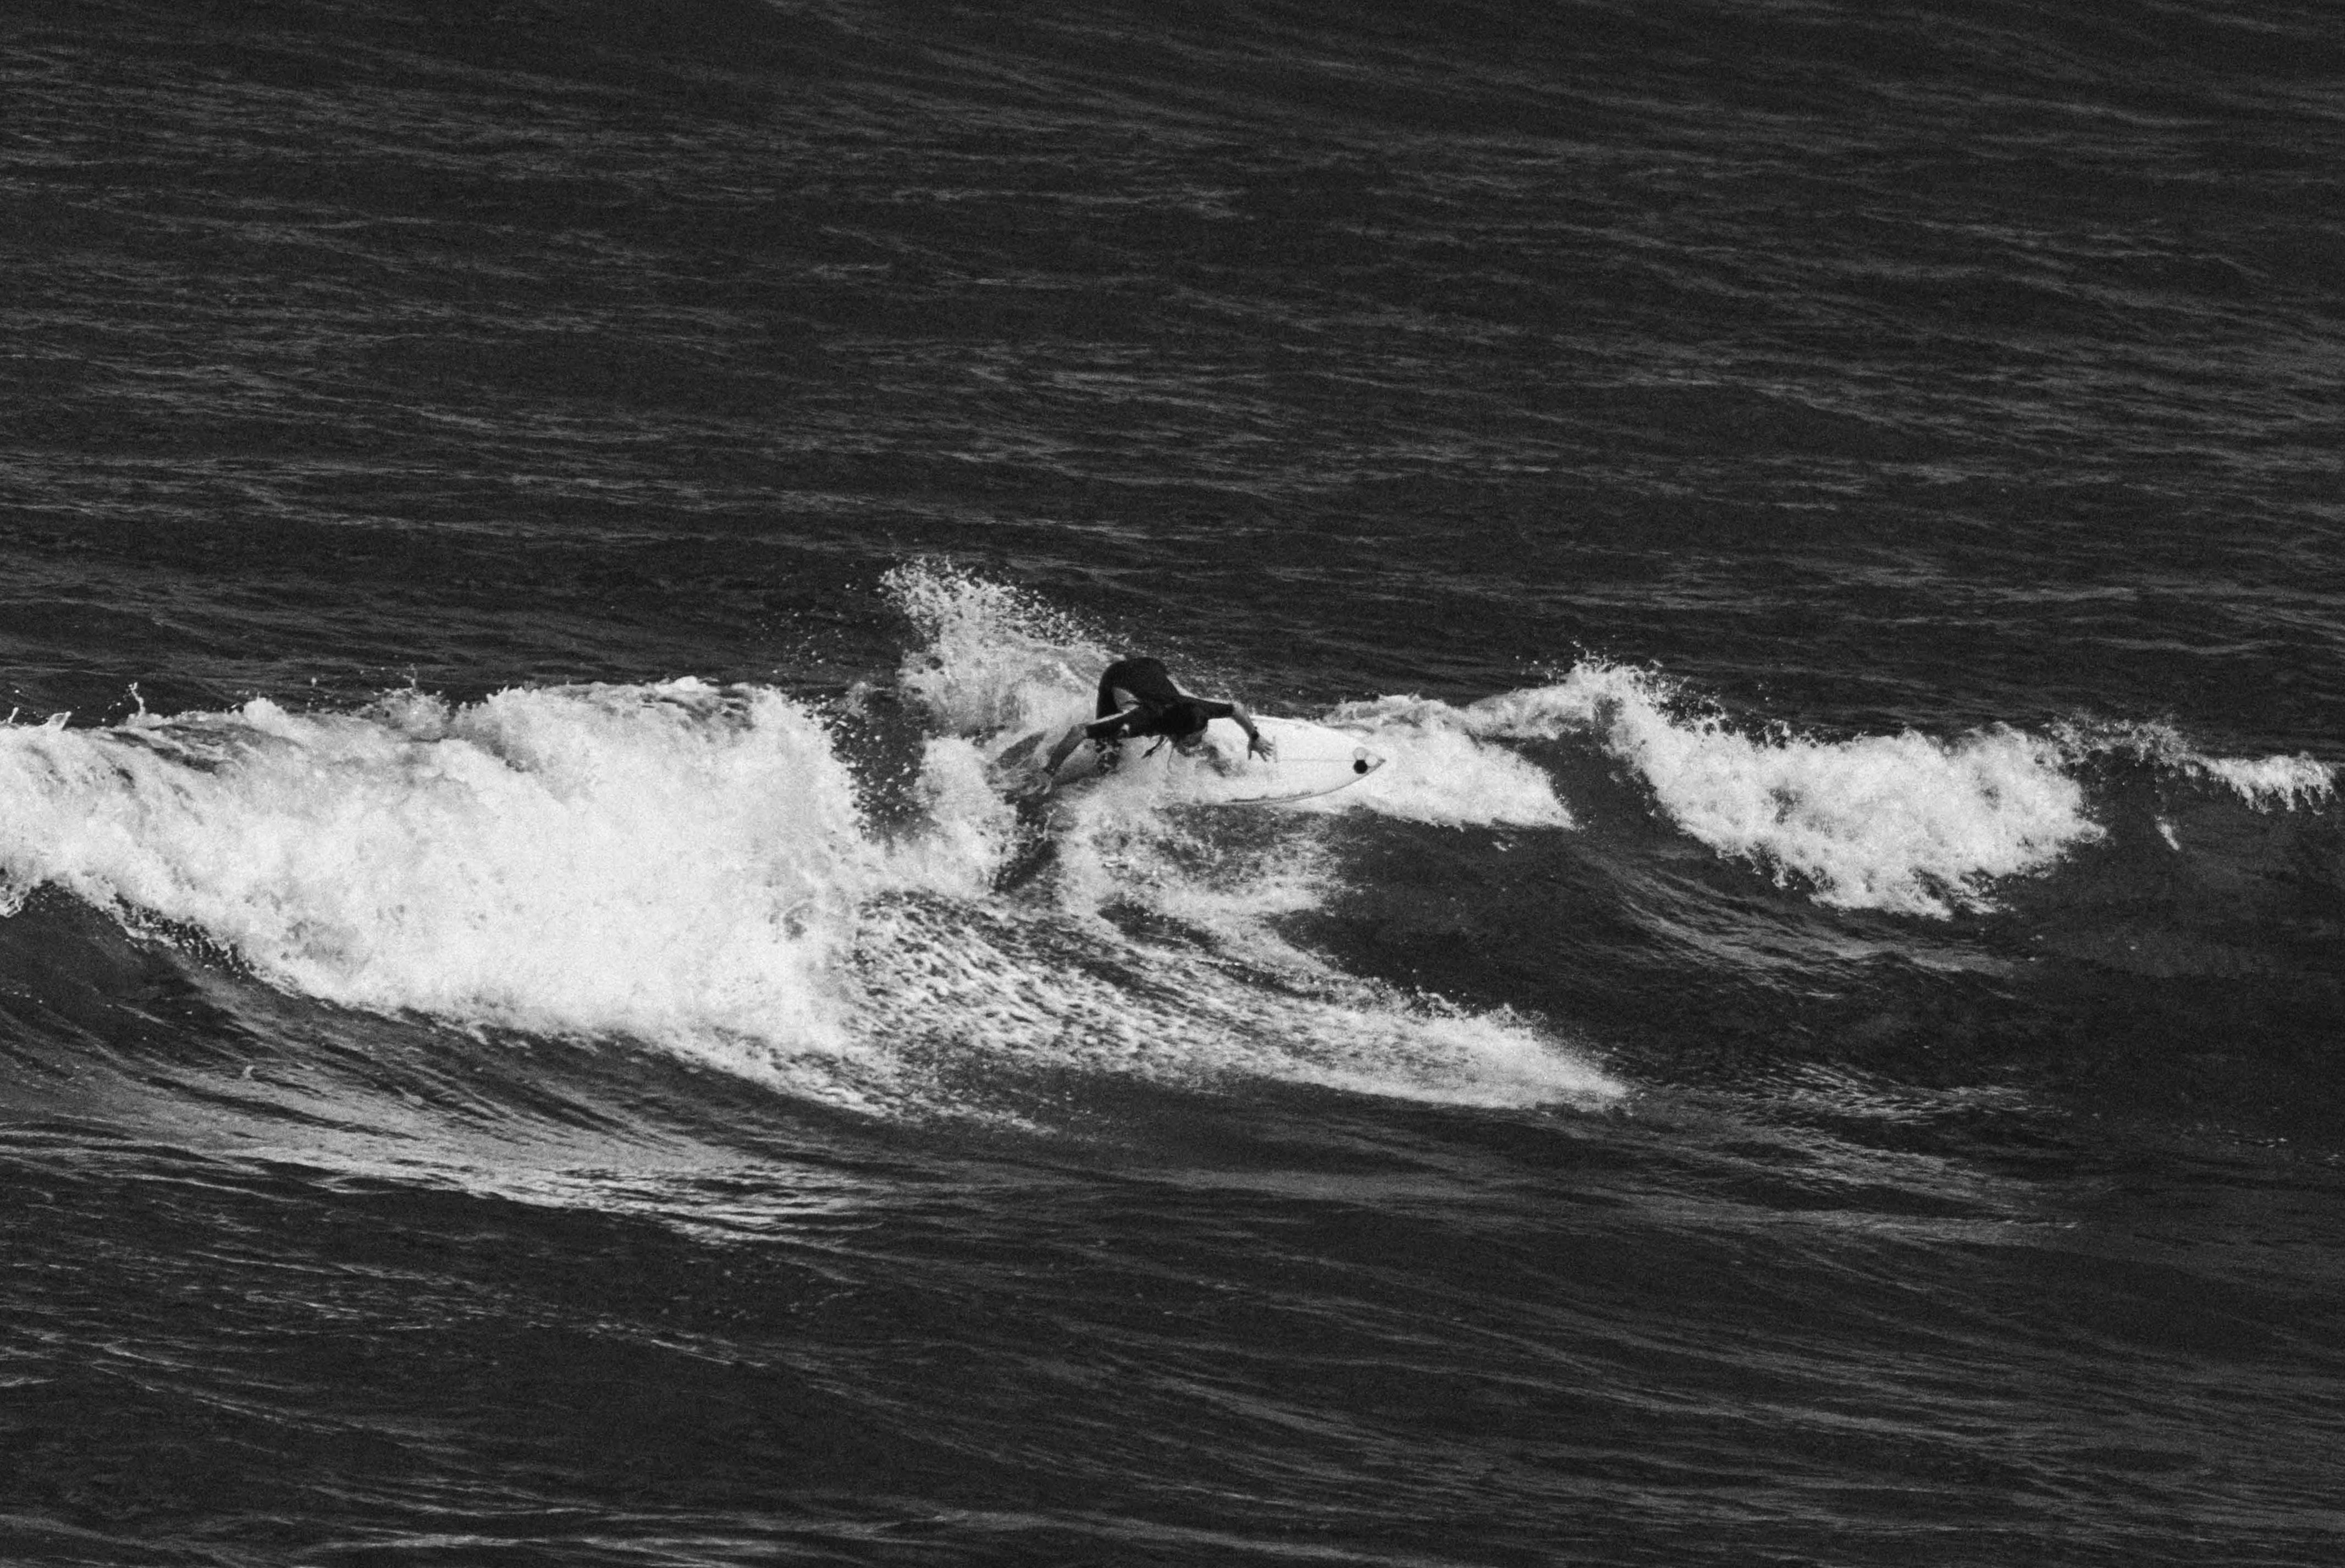 Every breaking wave · Zarautz, Pais Basc FOTO:  Júlia Palau Grau